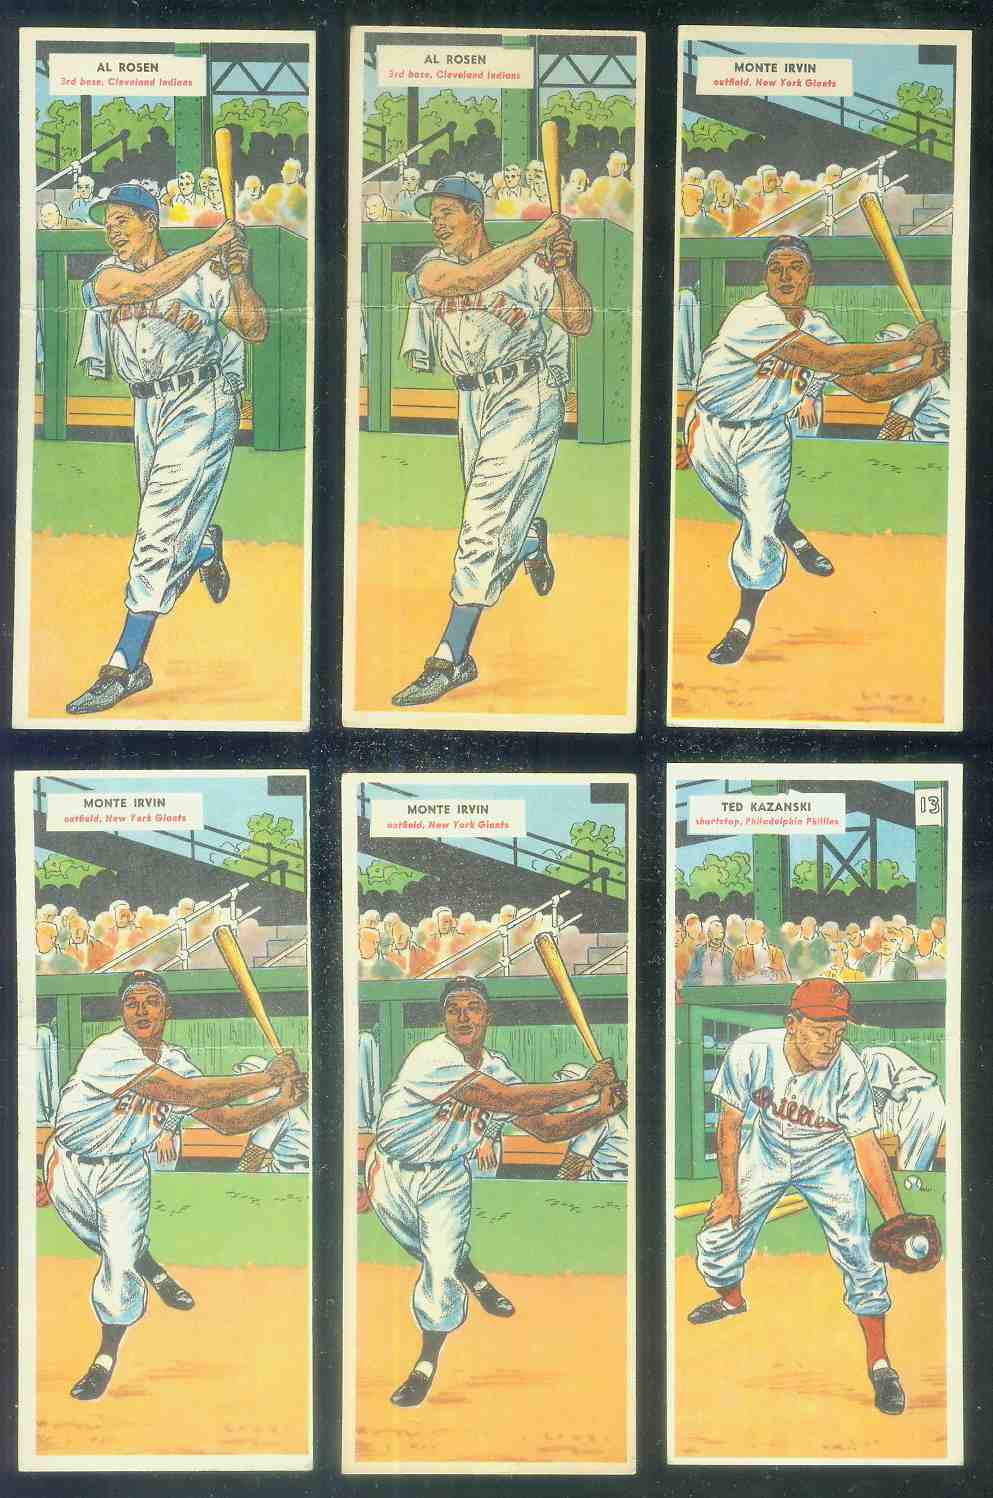 1955 Topps DoubleHeader #..1 Al Rosen / #2 Chuck Diering [#x] Baseball cards value